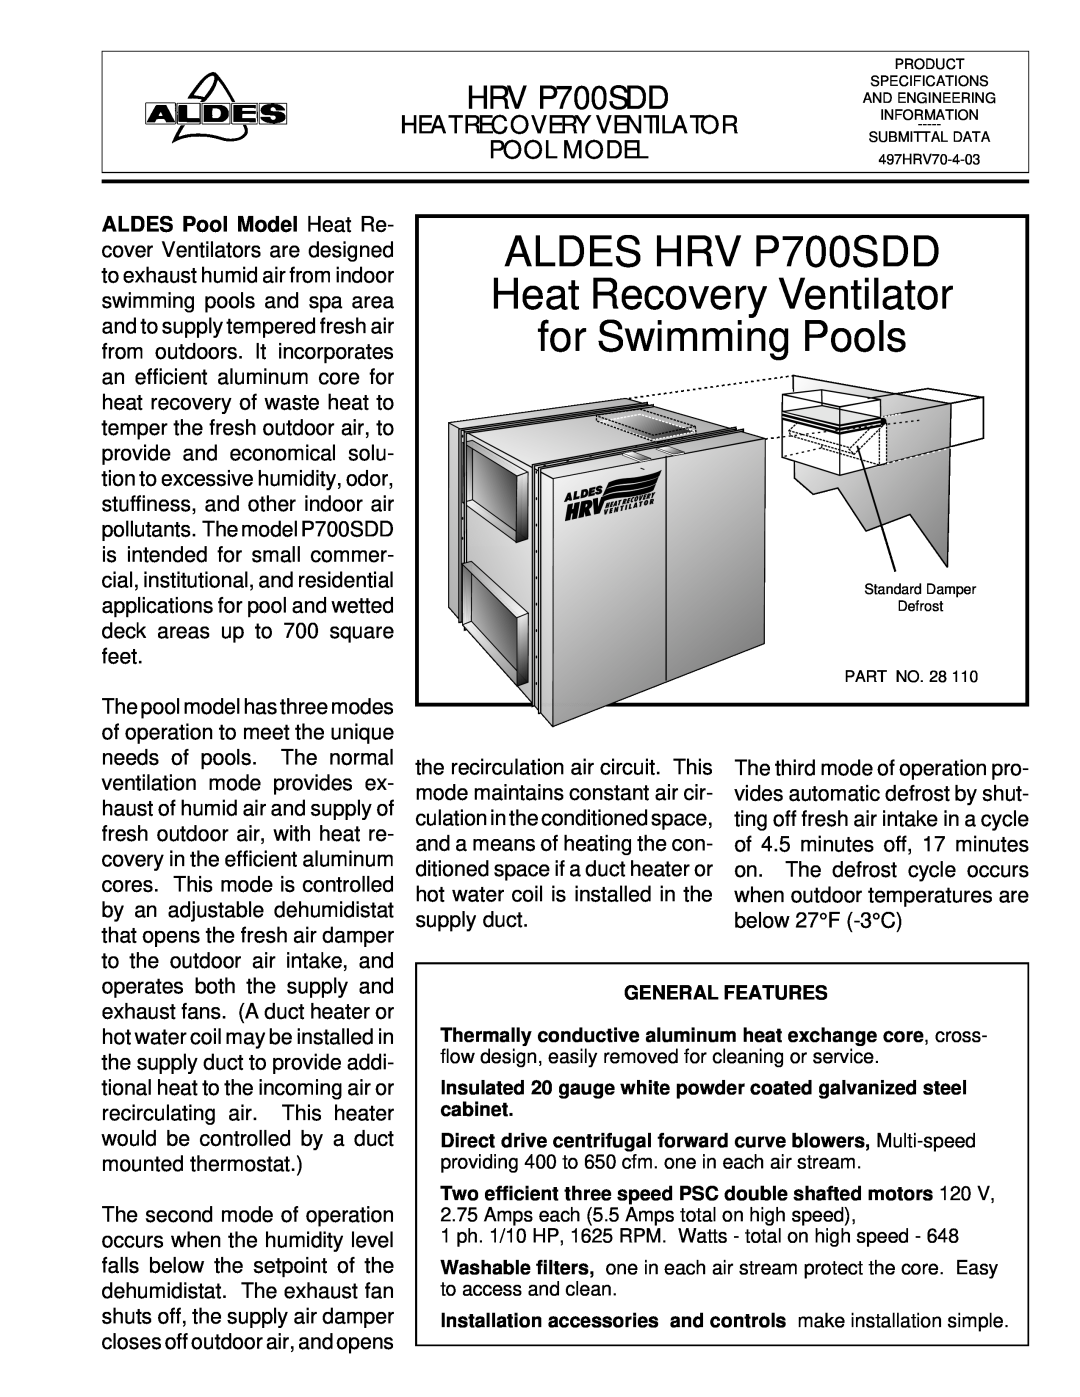 American Aldes HRV 700SDD, HRV 700SFD manual Heat Recovery Ventilator Pool Model, ALDES HRV P700SDD, for Swimming Pools 